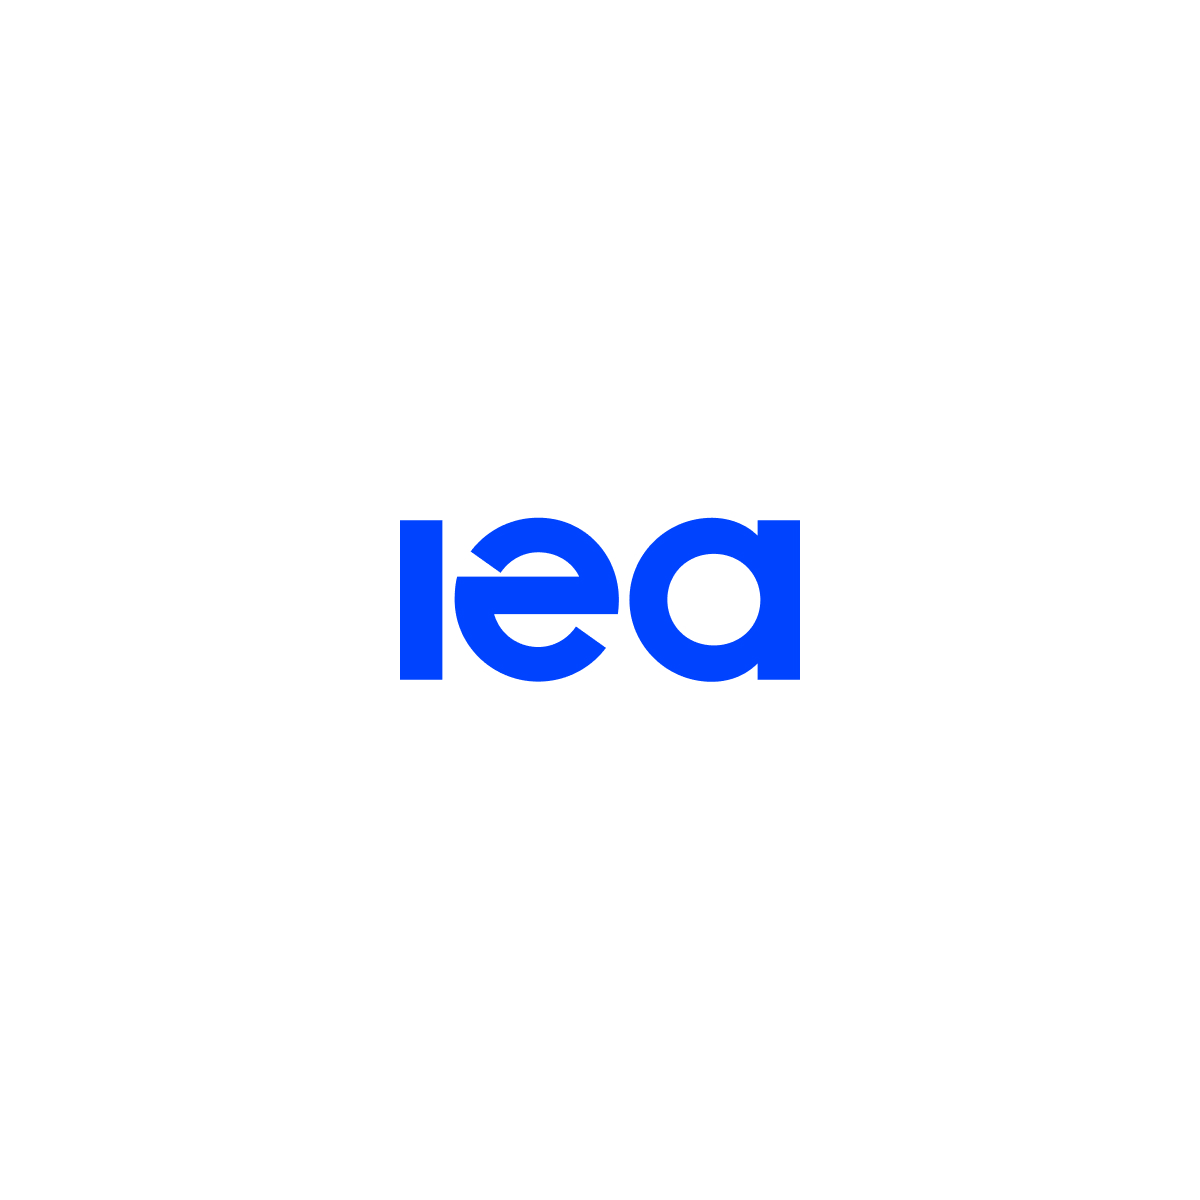 International Energy Agency: IEA